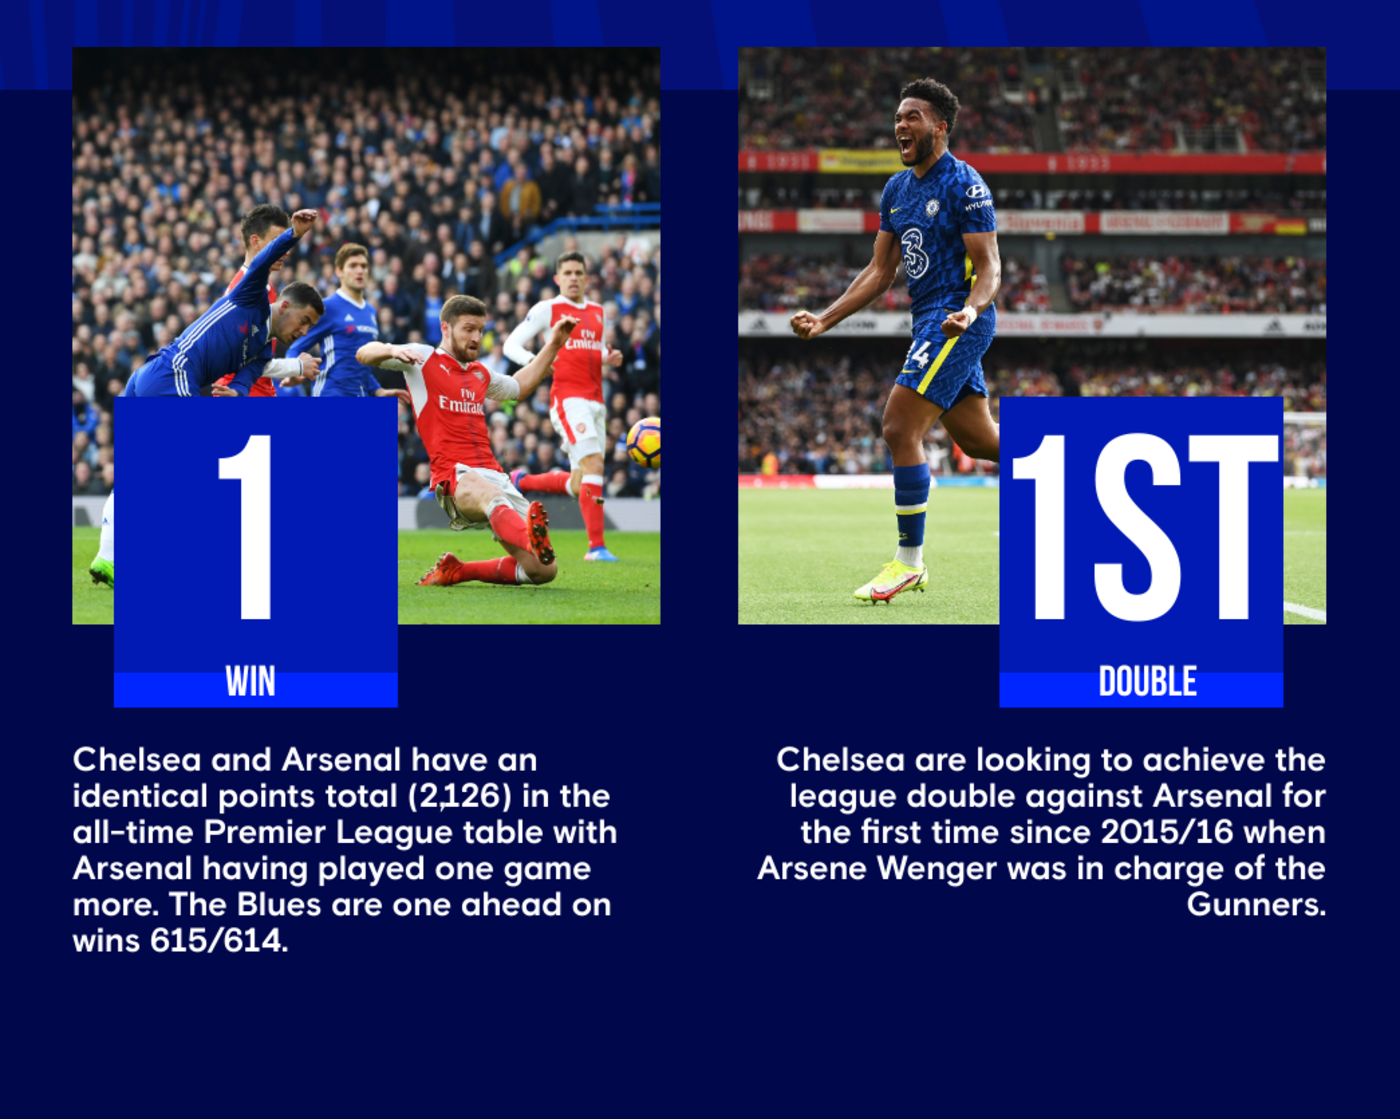 London FC (Chelsea) PES 2013 Stats